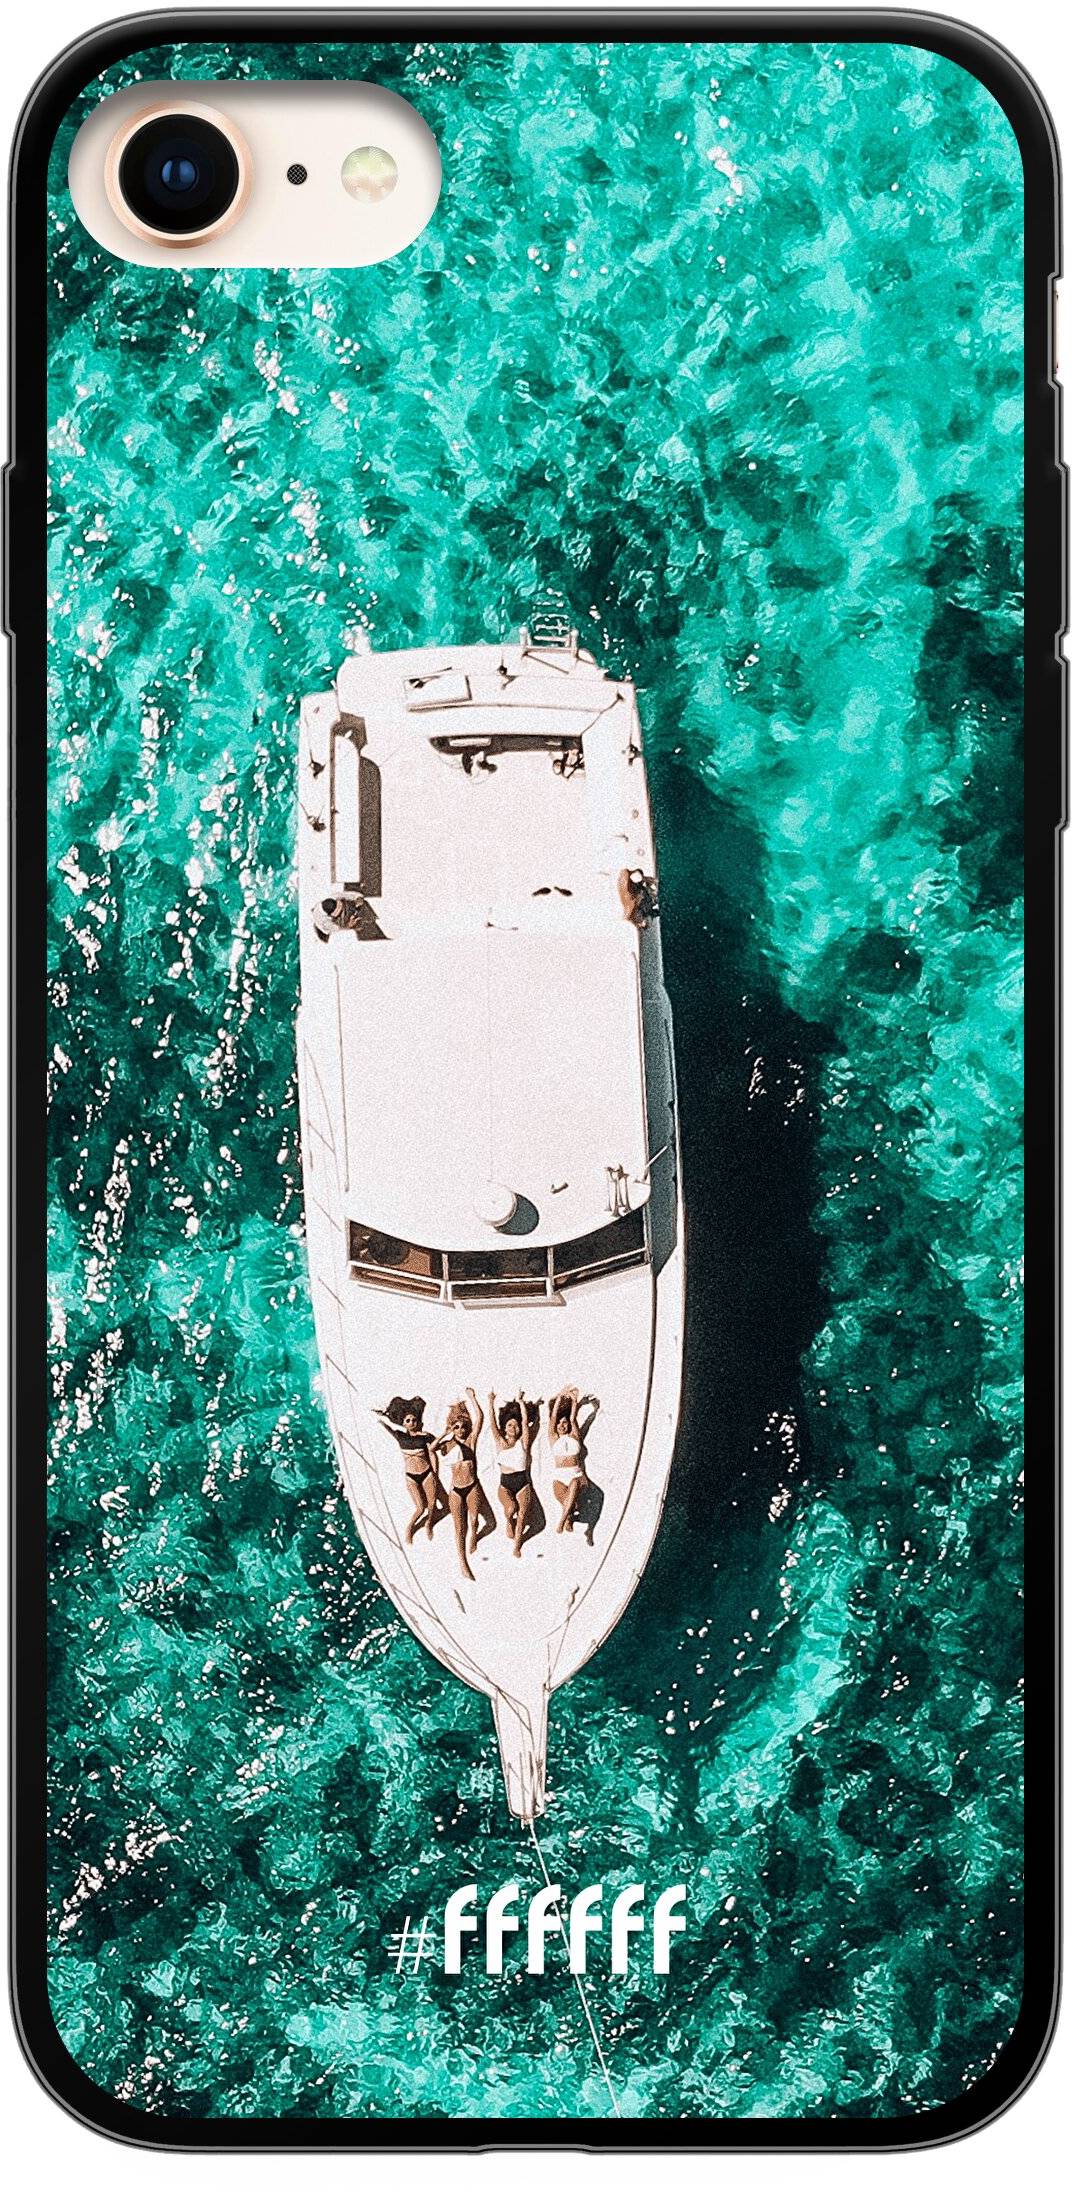 Yacht Life iPhone 7